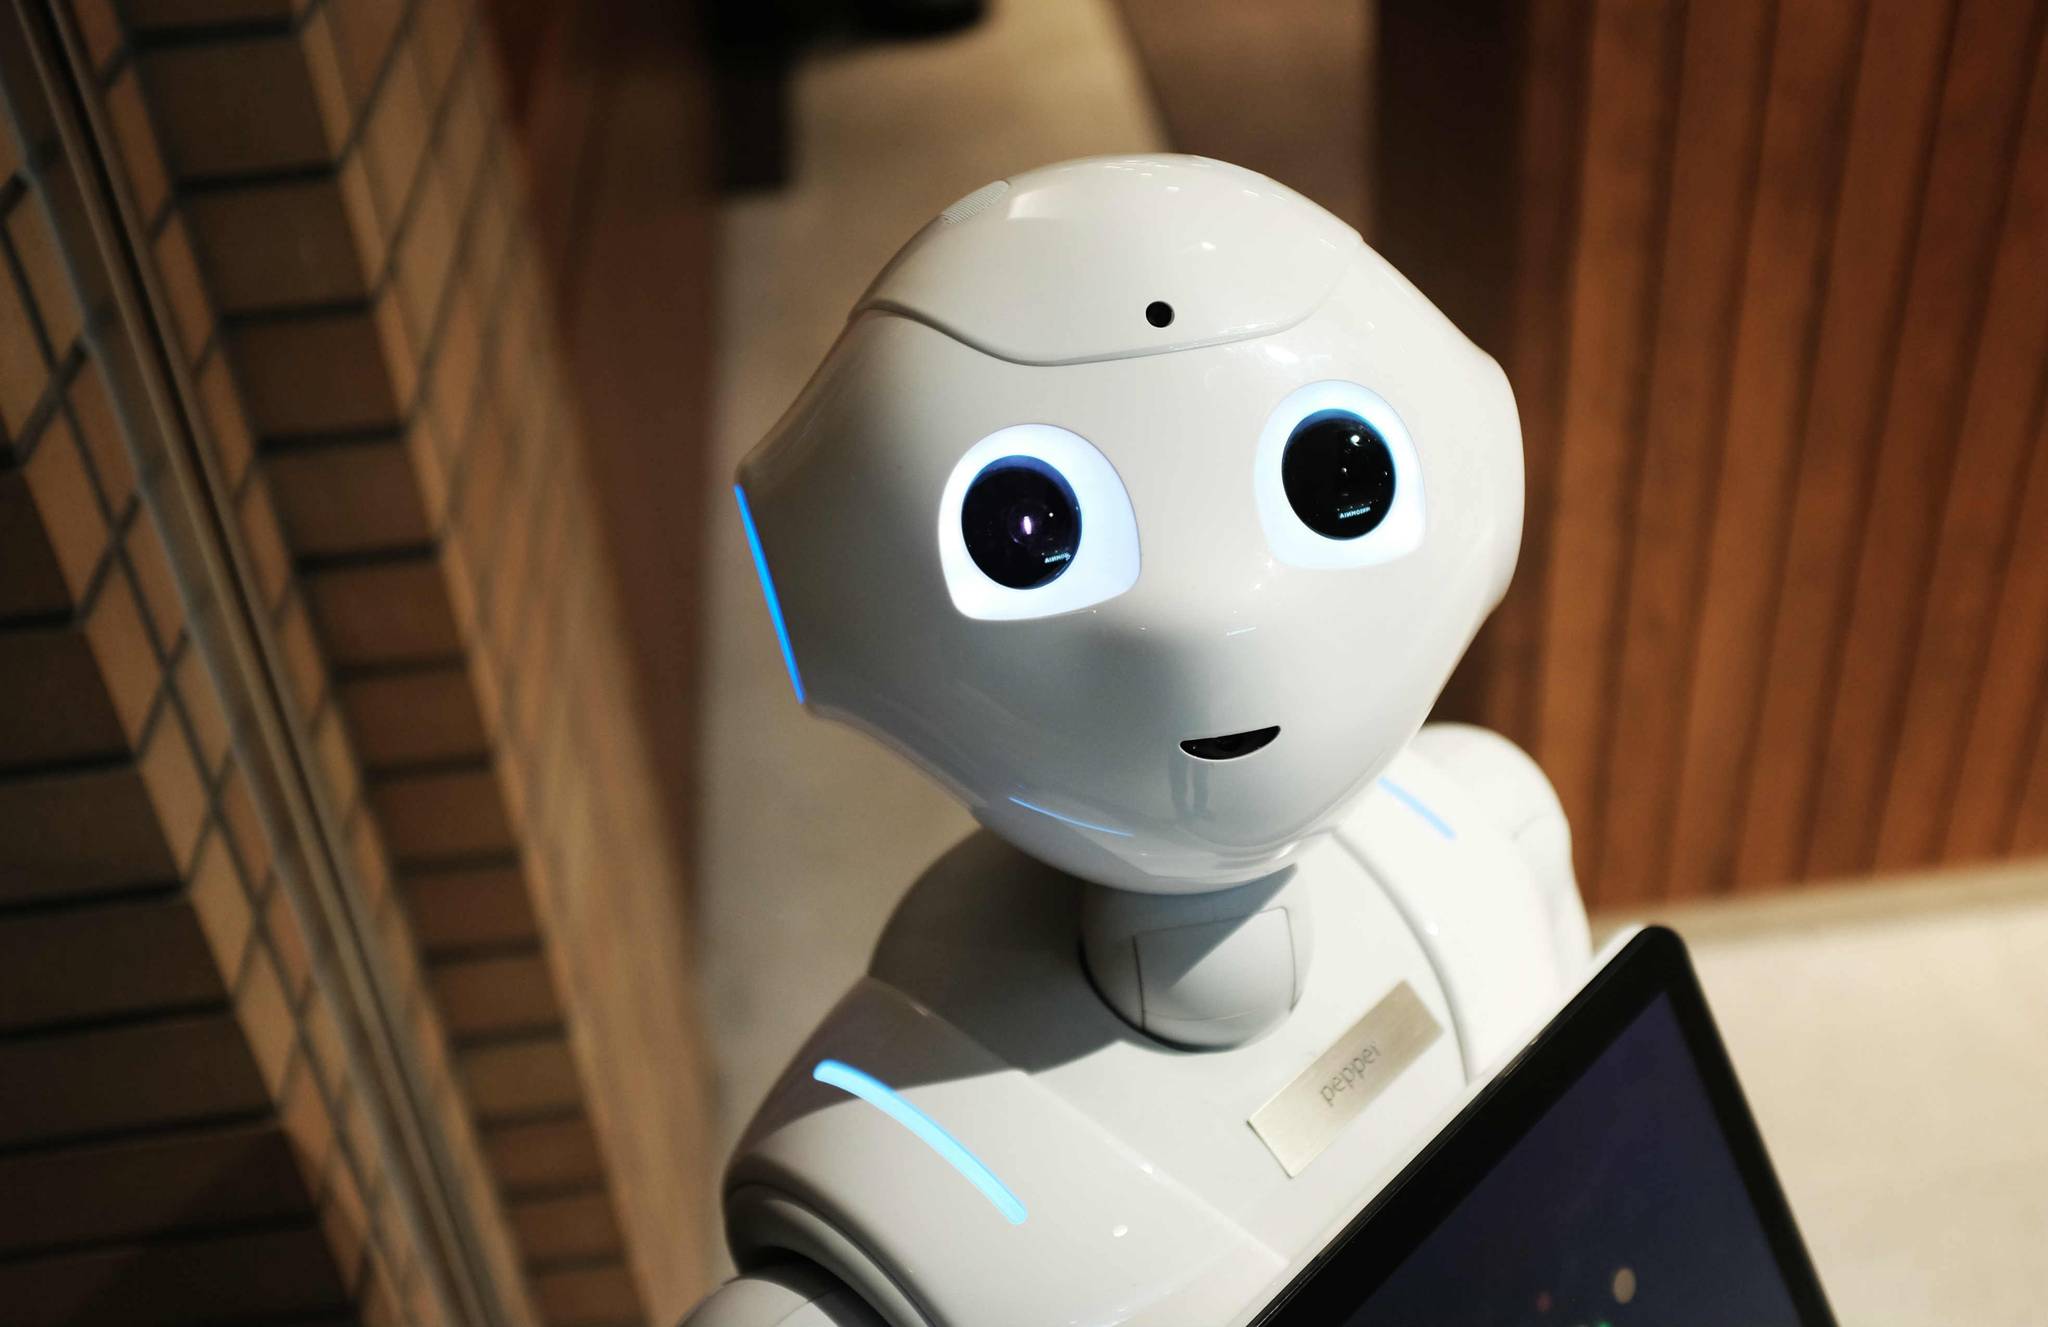 People in Japan see robots as benevolent human helpers